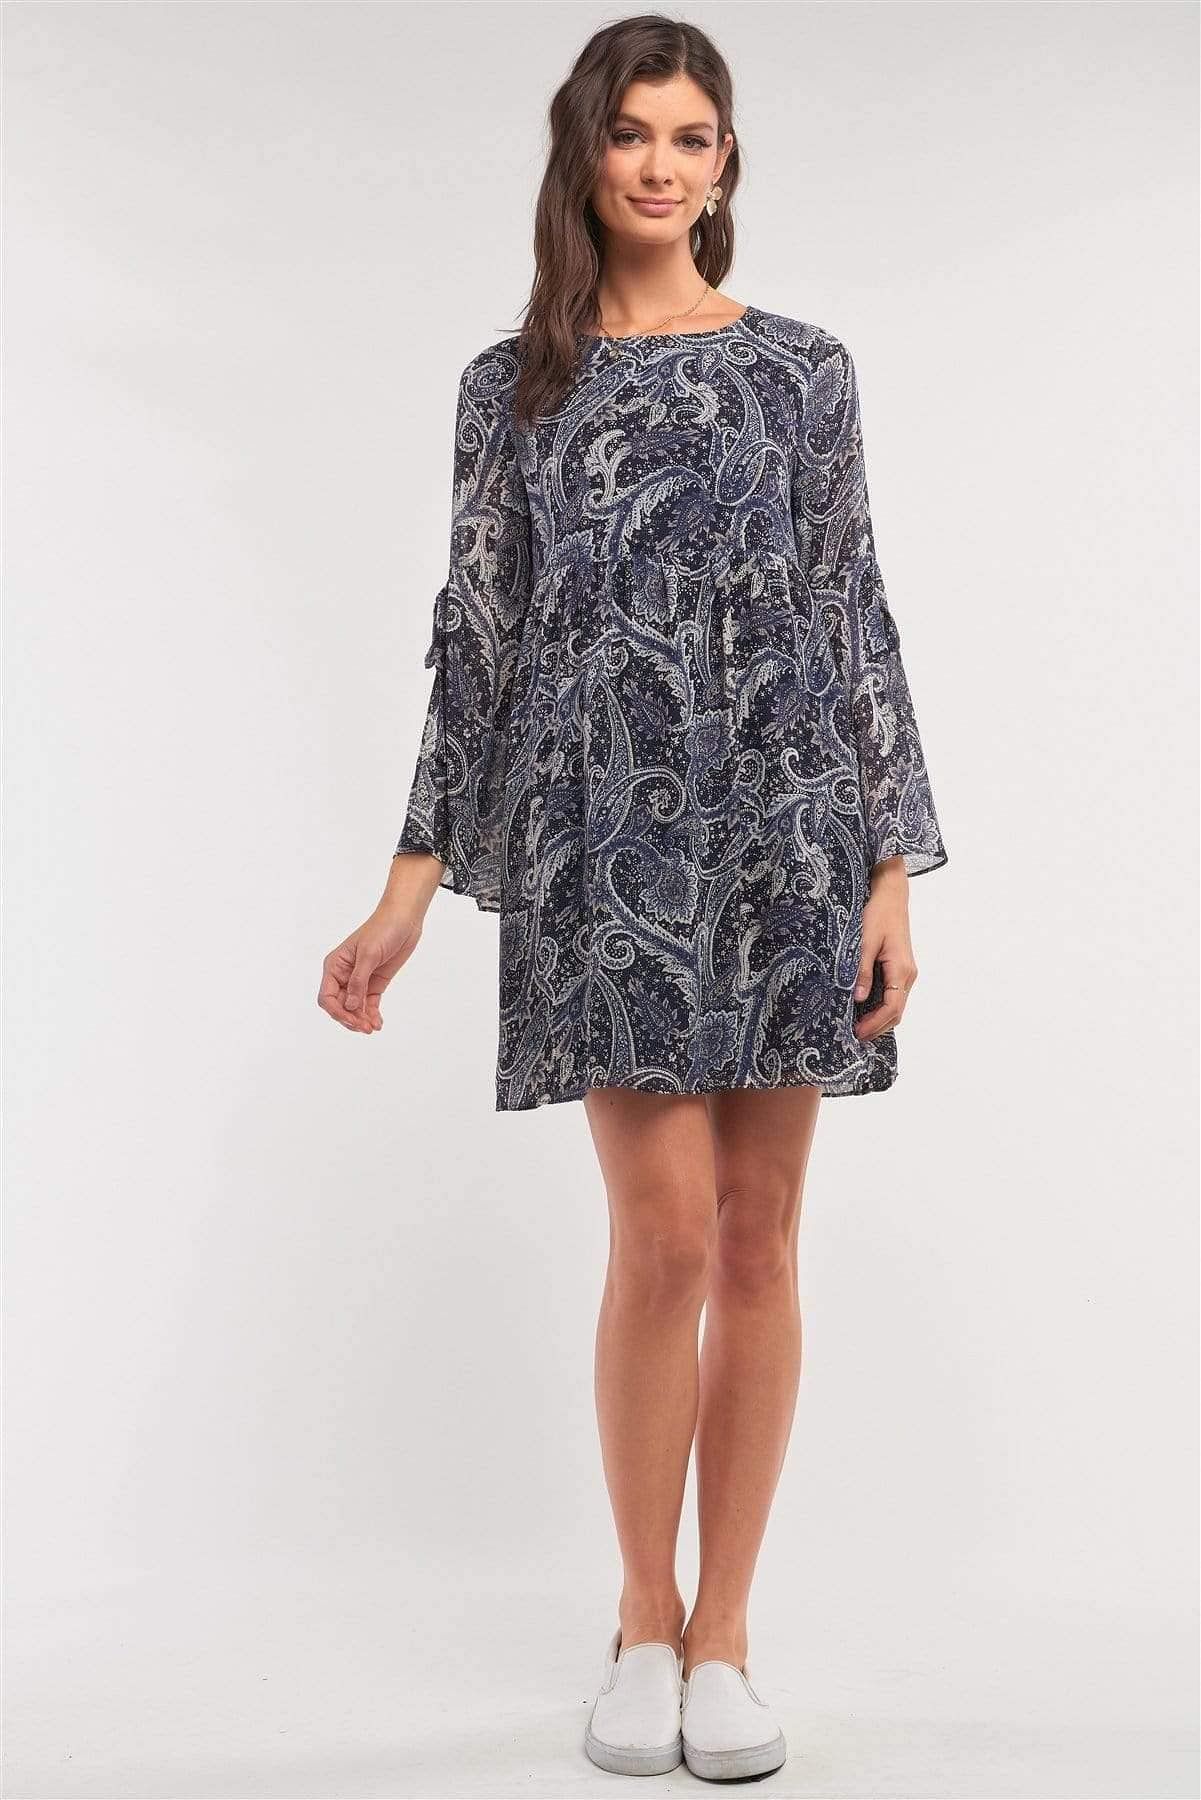 Navy Paisley Print Long Sleeve Mini Dress - Shopping Therapy, LLC dress